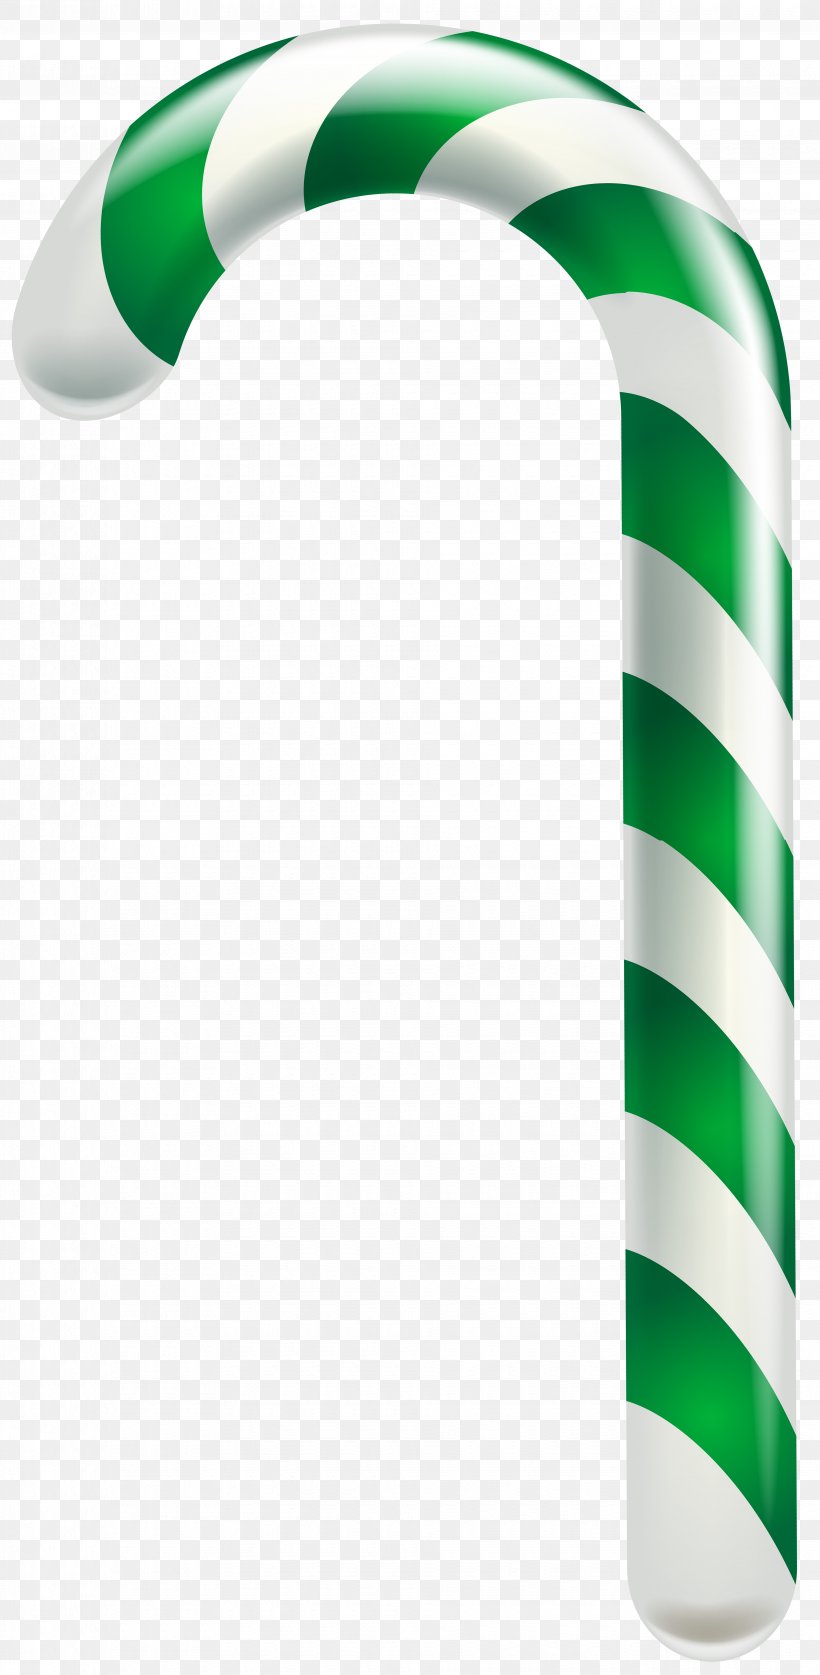 Candy Cane Stick Candy Lollipop Clip Art, PNG, 3915x8000px, Candy Cane, Candy, Green, Lollipop, Mentha Spicata Download Free